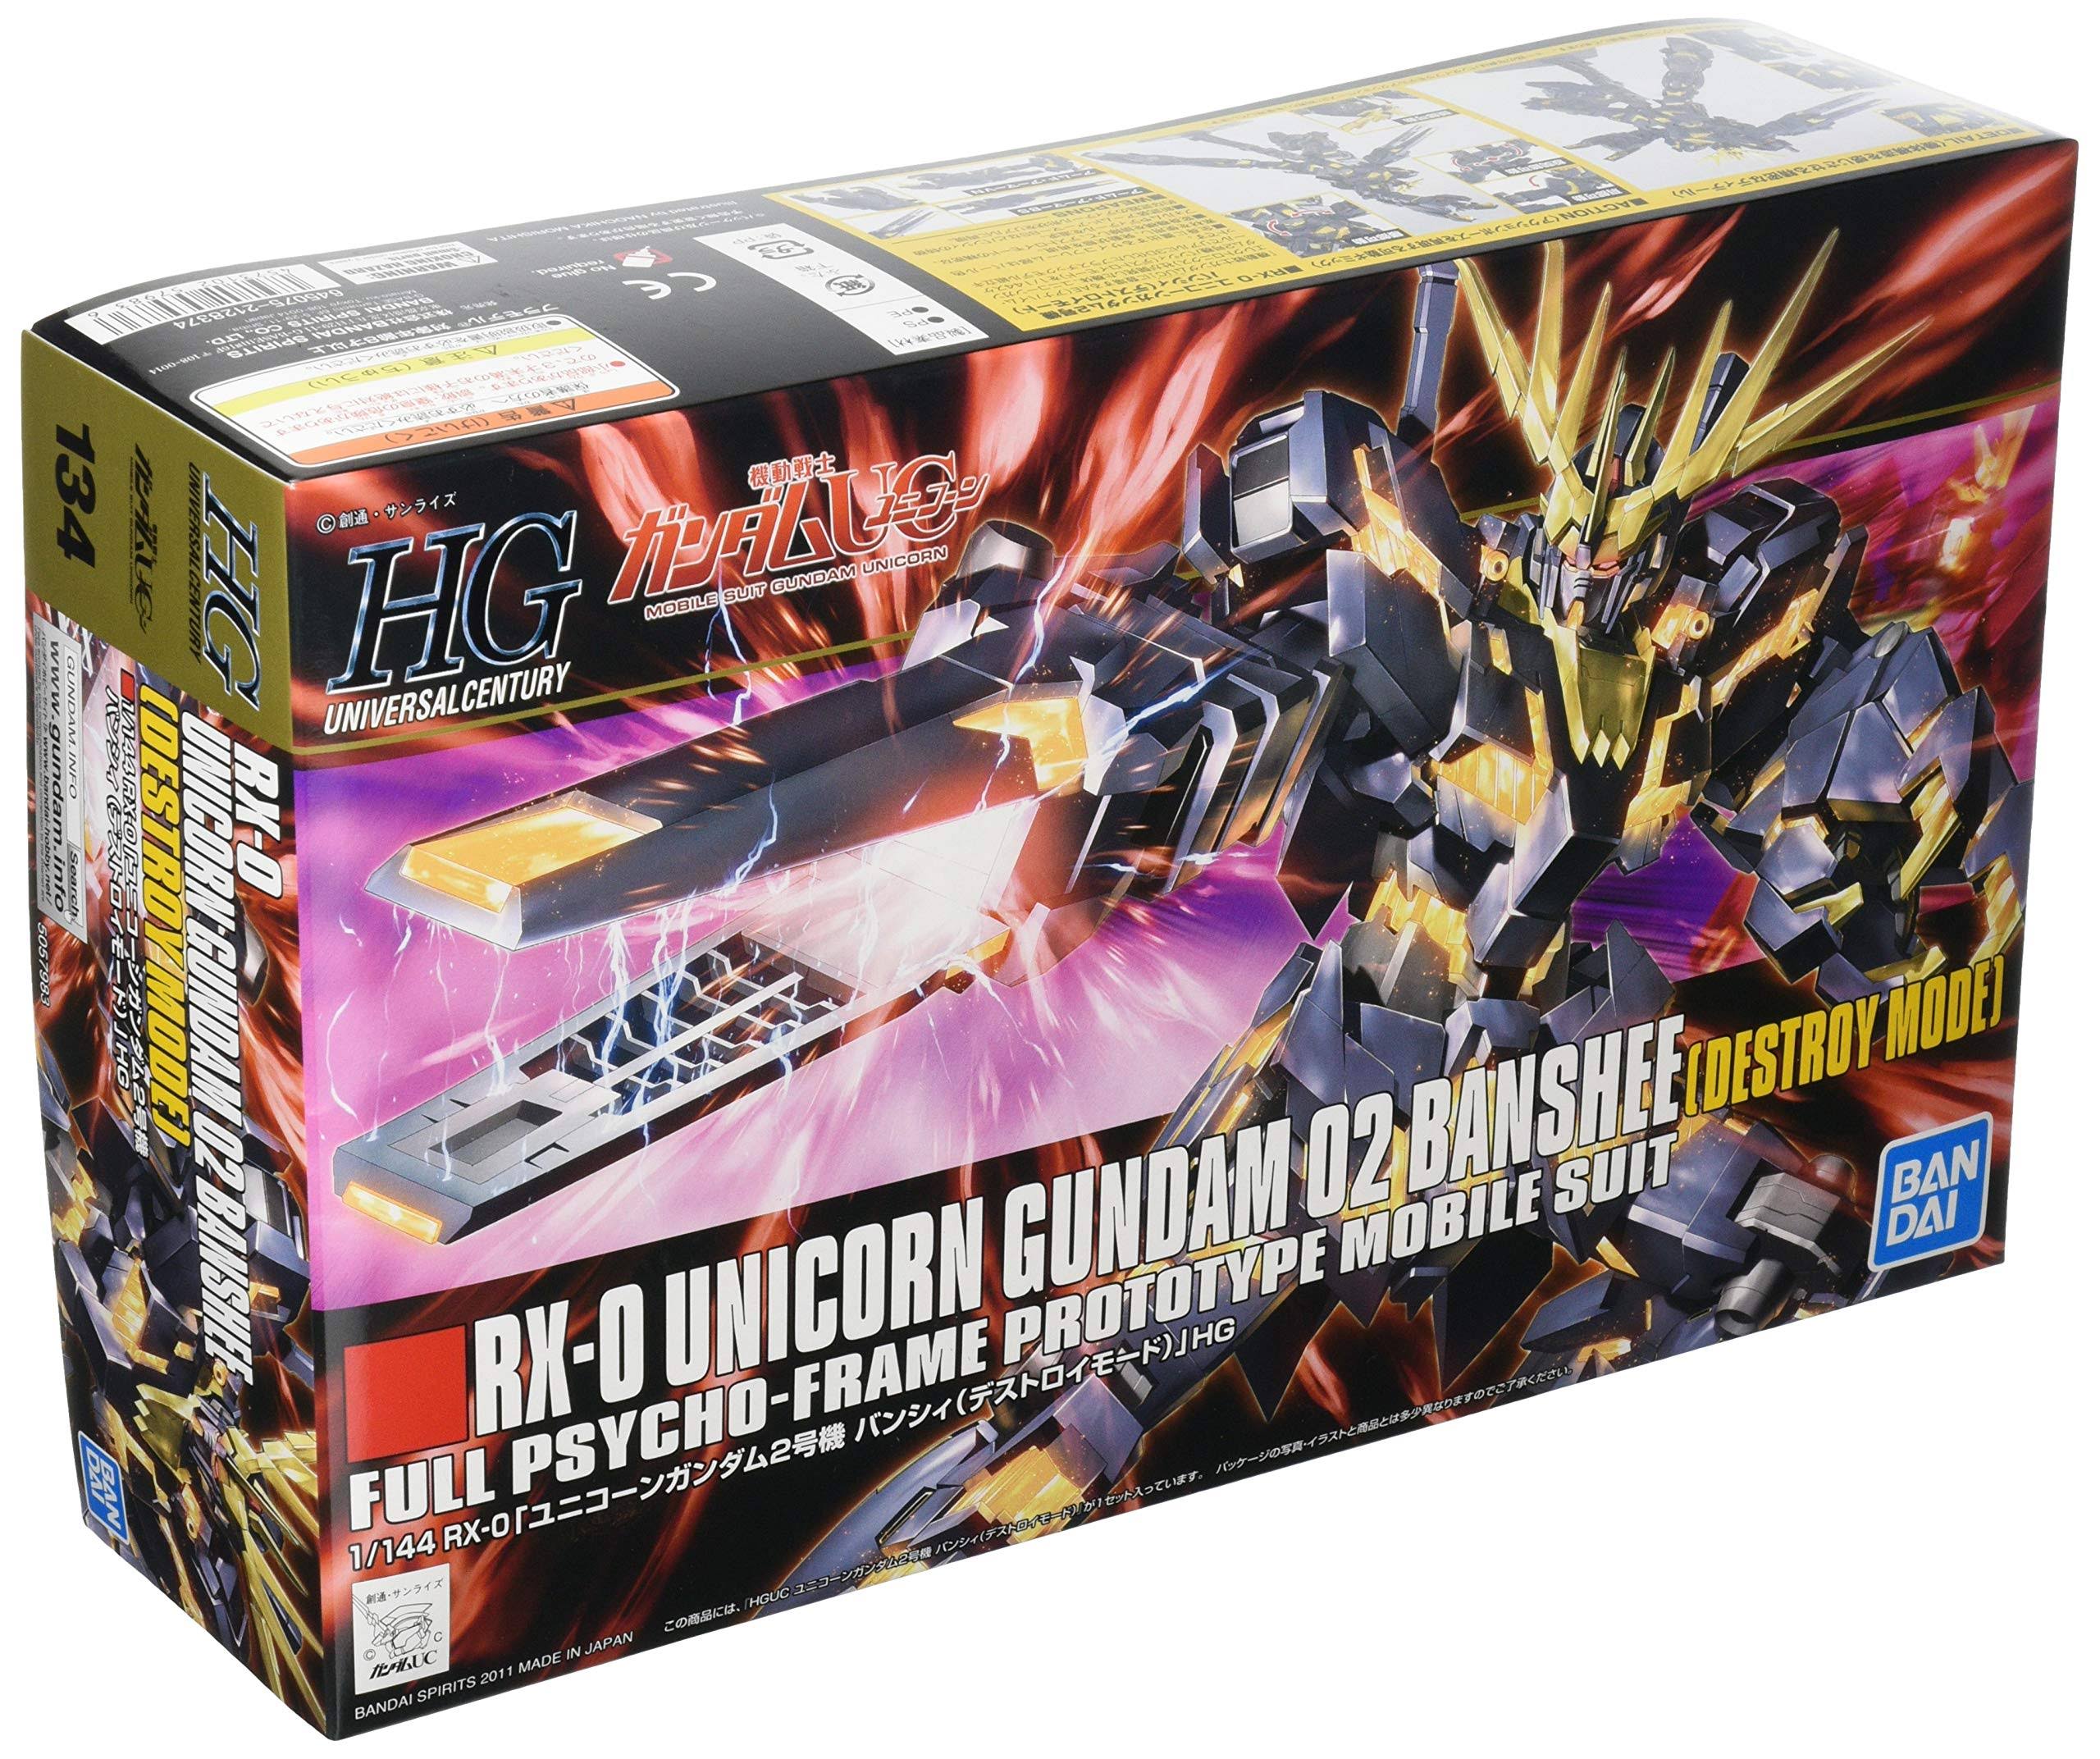 Gundam High Grade Universal Century 134 RX-0 Unicorn Gundam 02 Banshee Model Kit - 1:144 Scale